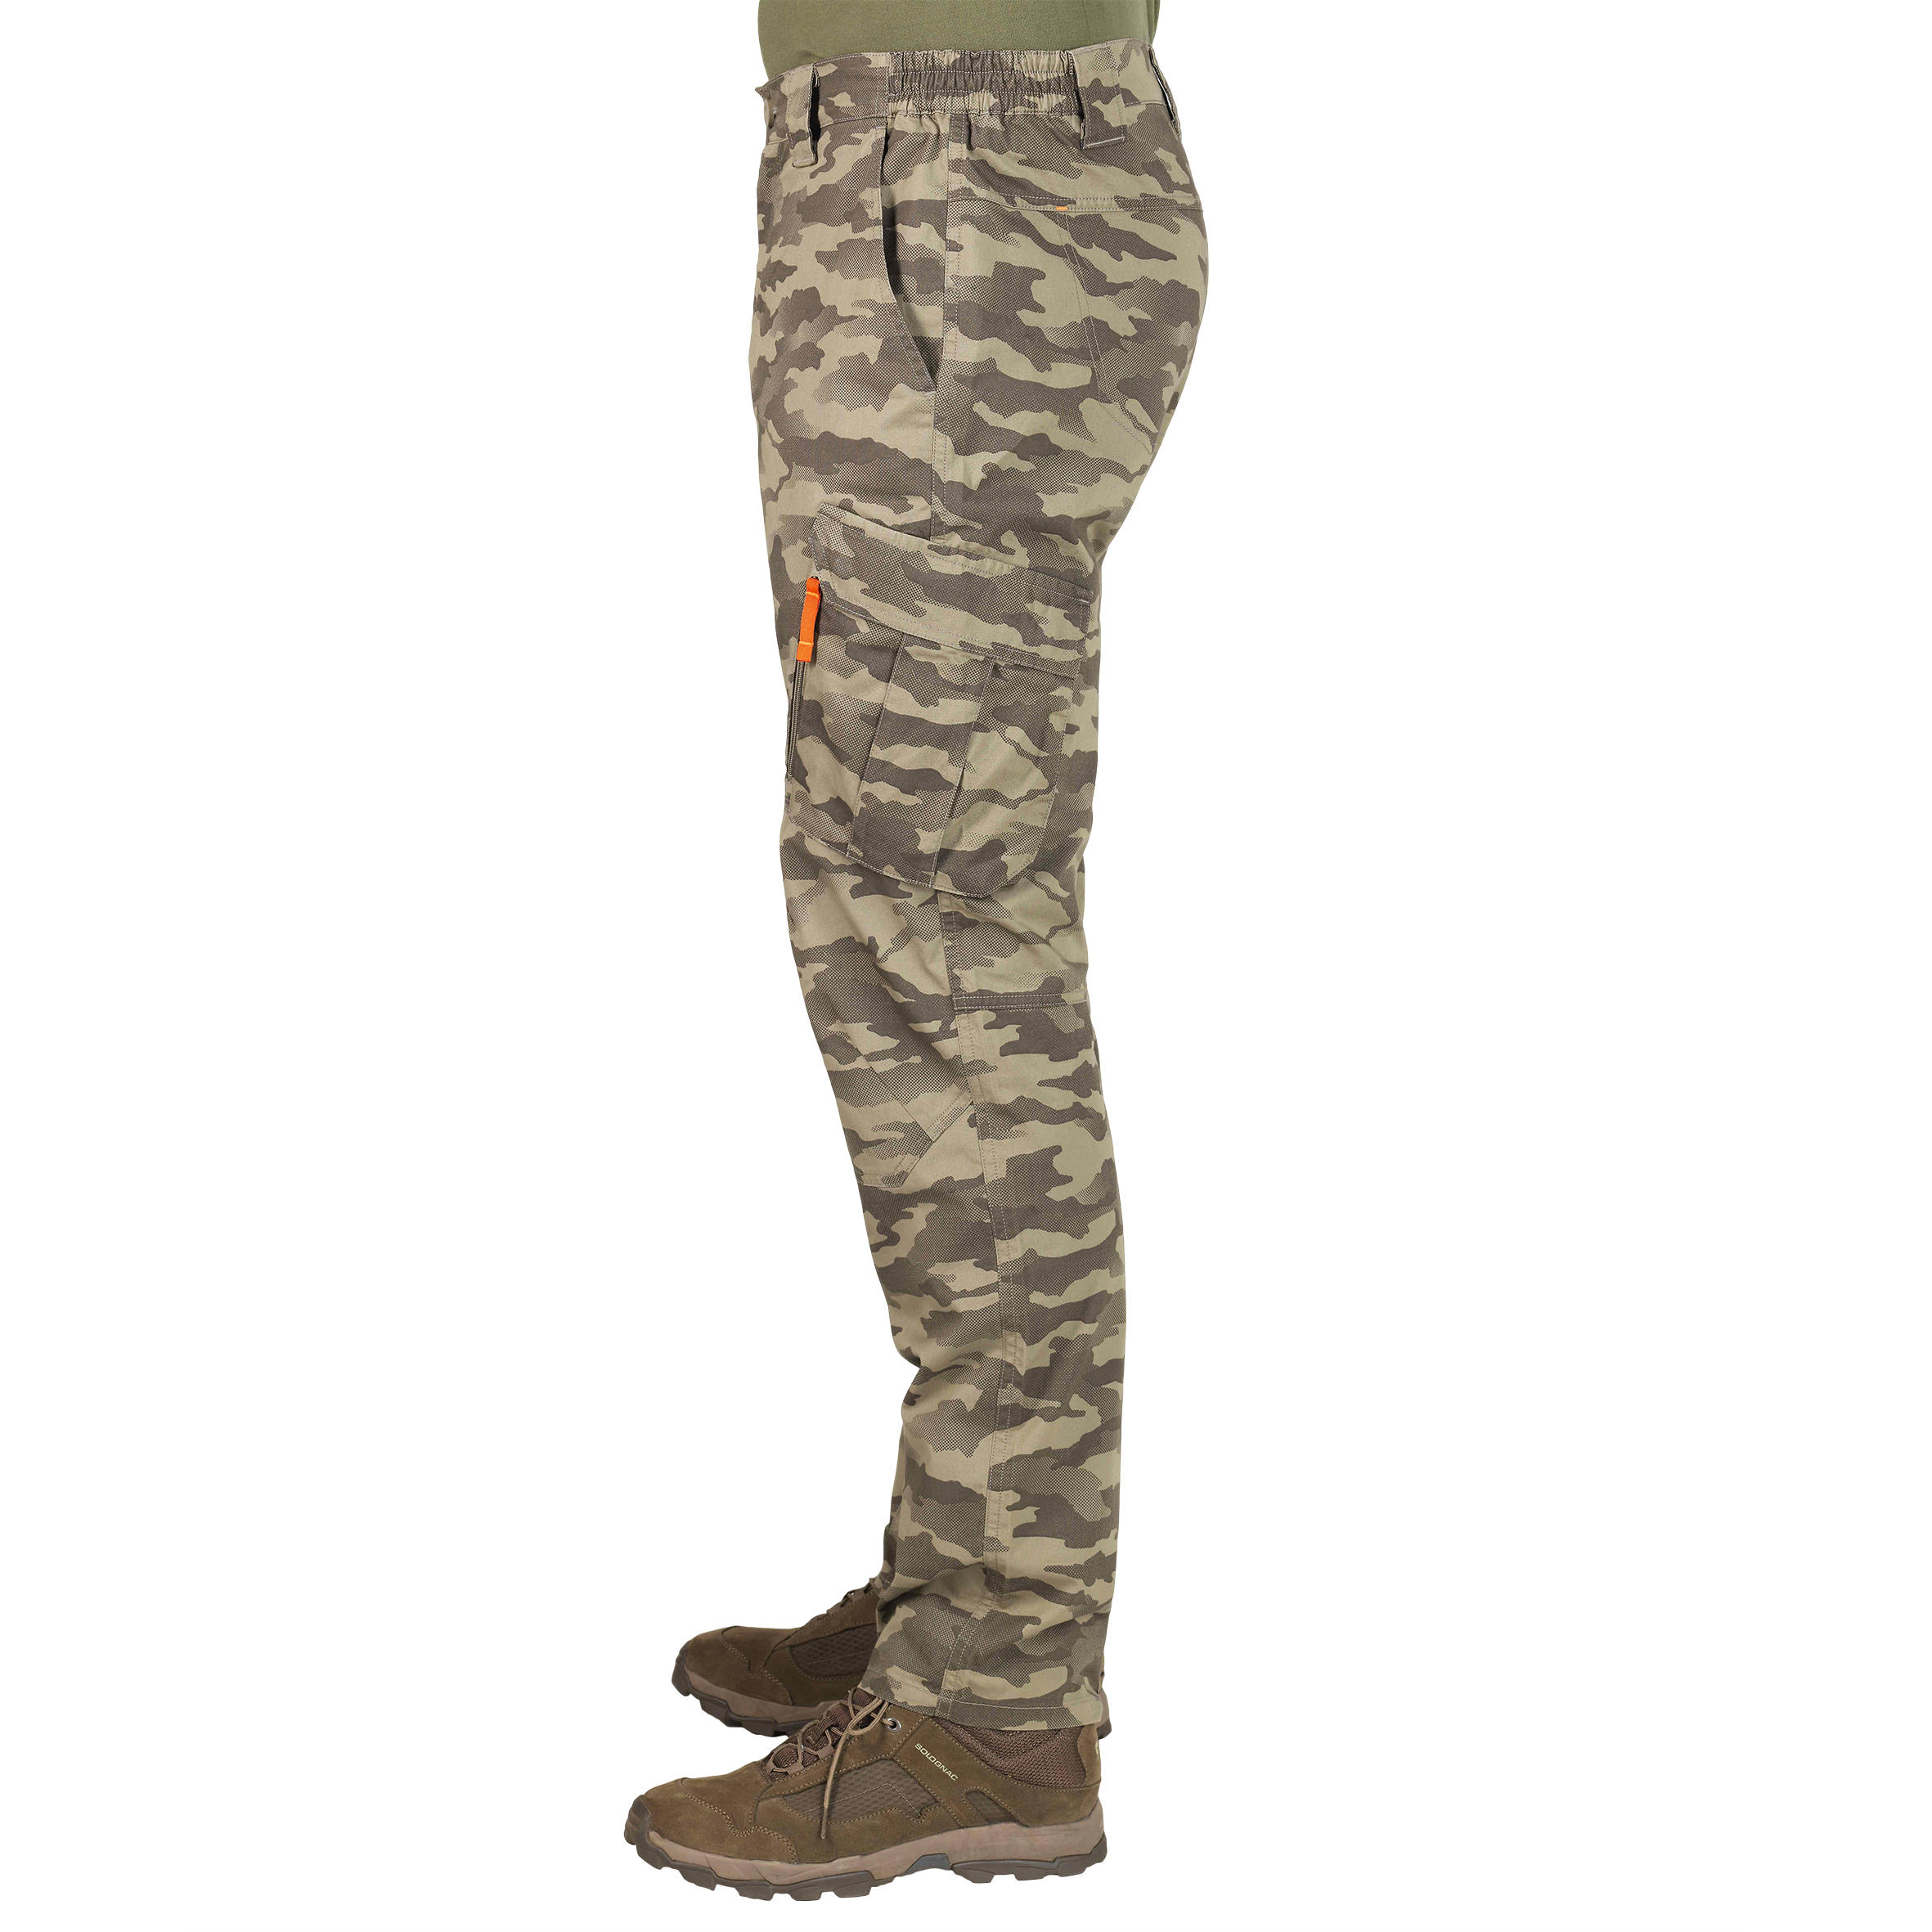 decathlon army pants